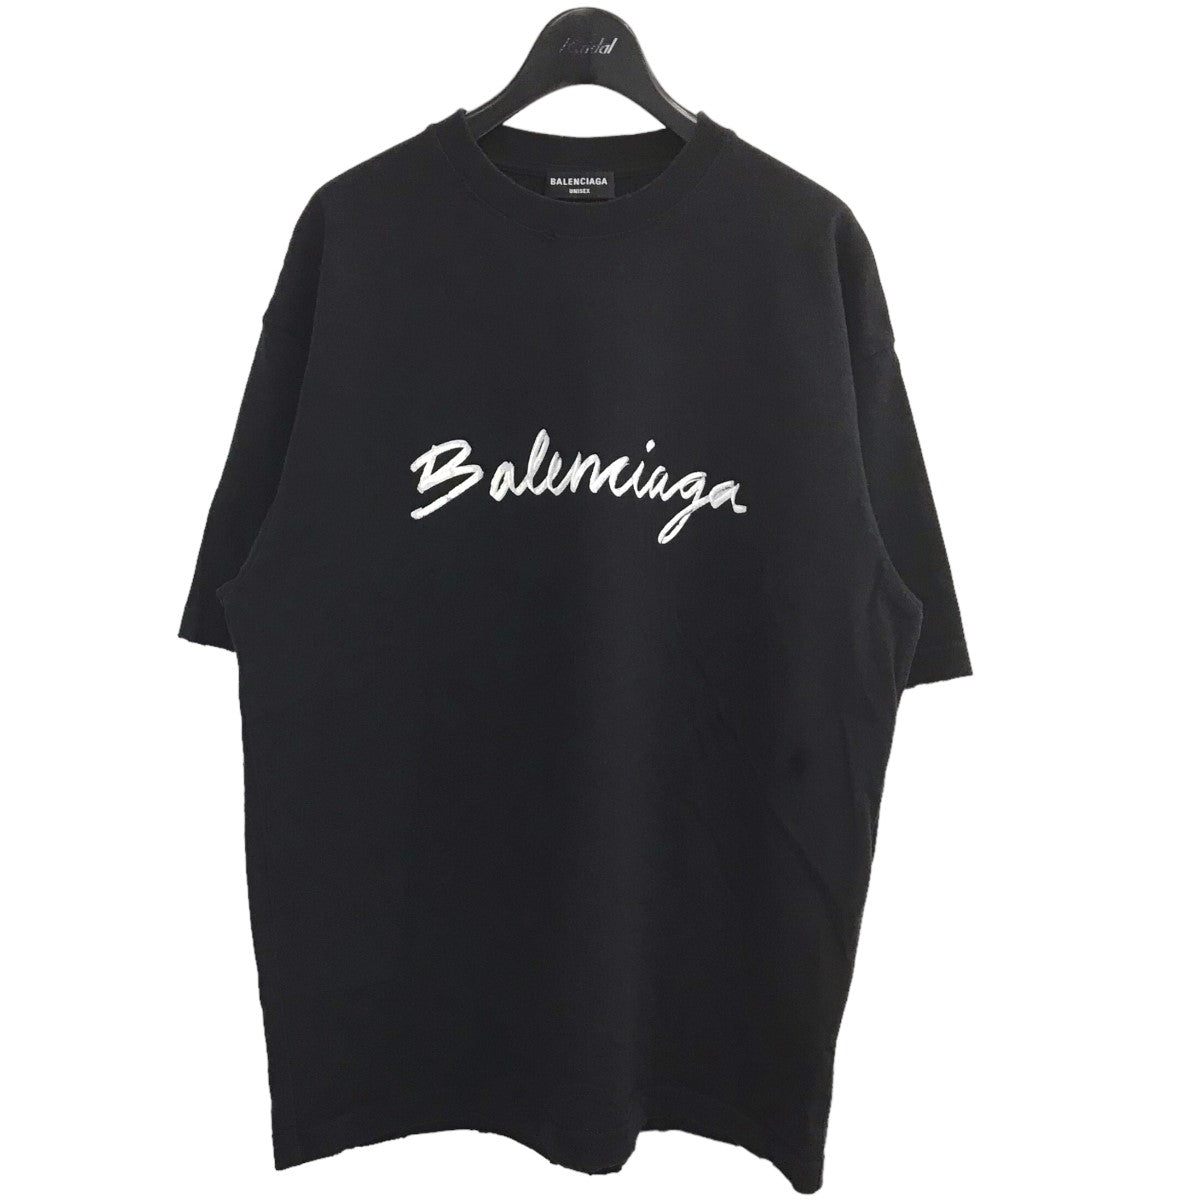 BALENCIAGA(バレンシアガ) シグネチャーロゴダメージ加工Tシャツ612966 